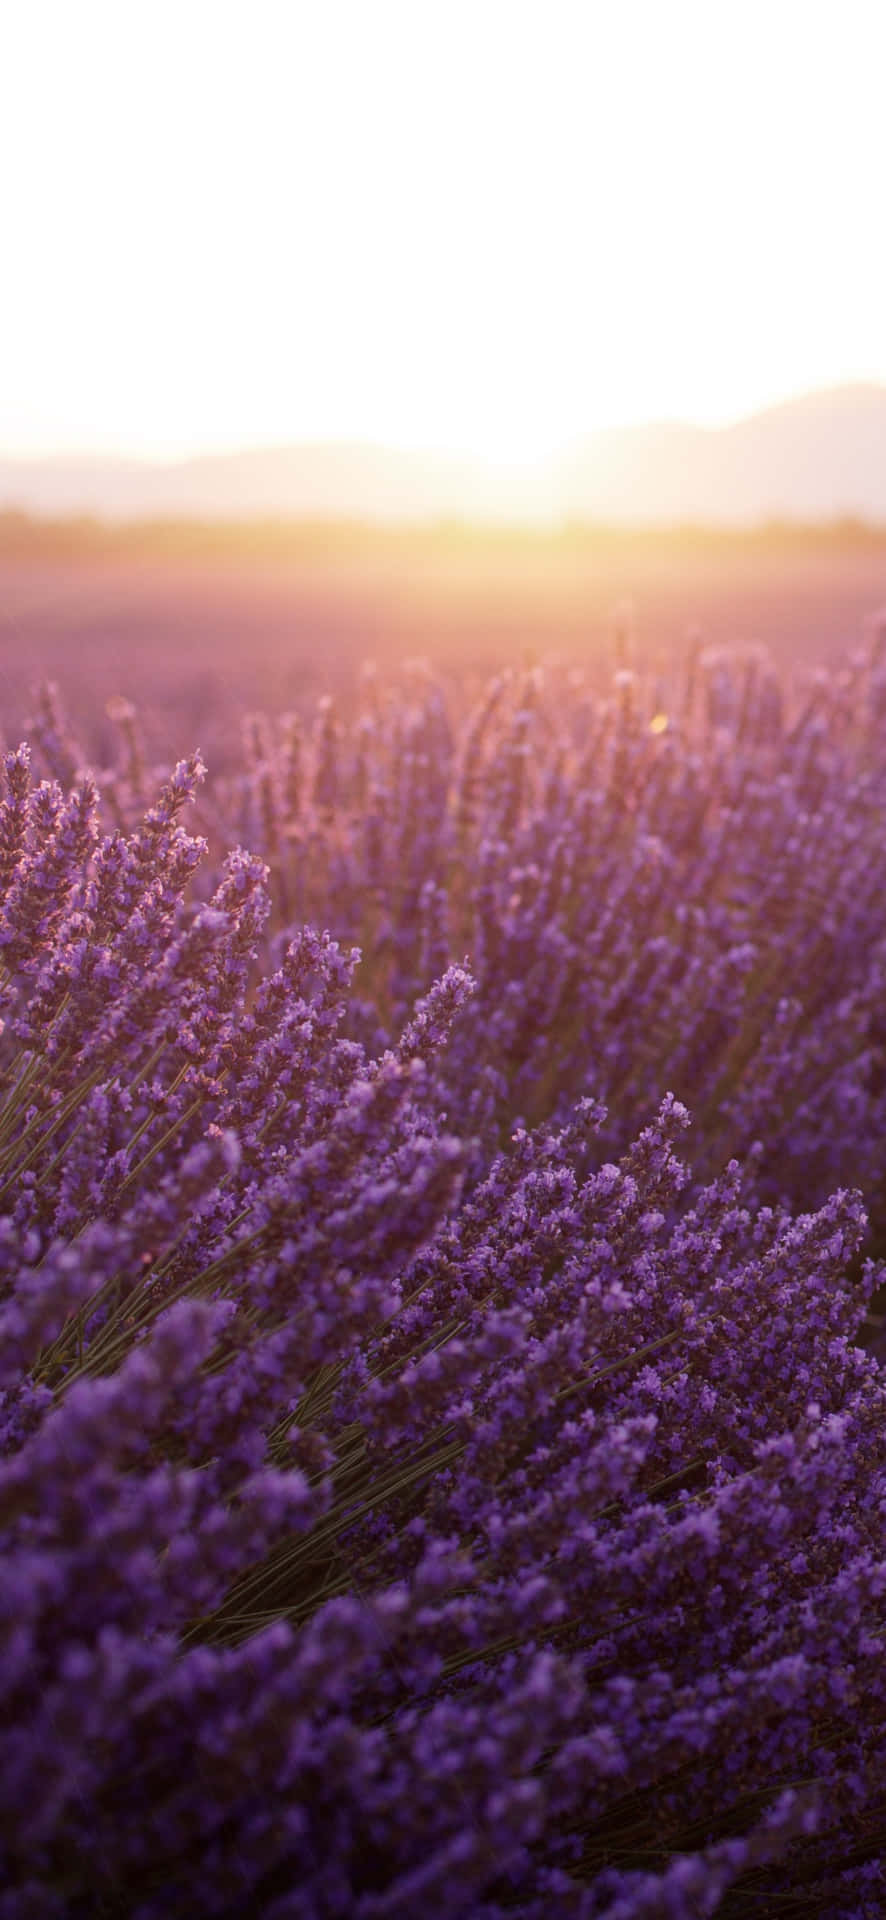 Morning Lavender Flowers In A Field Wallpaper